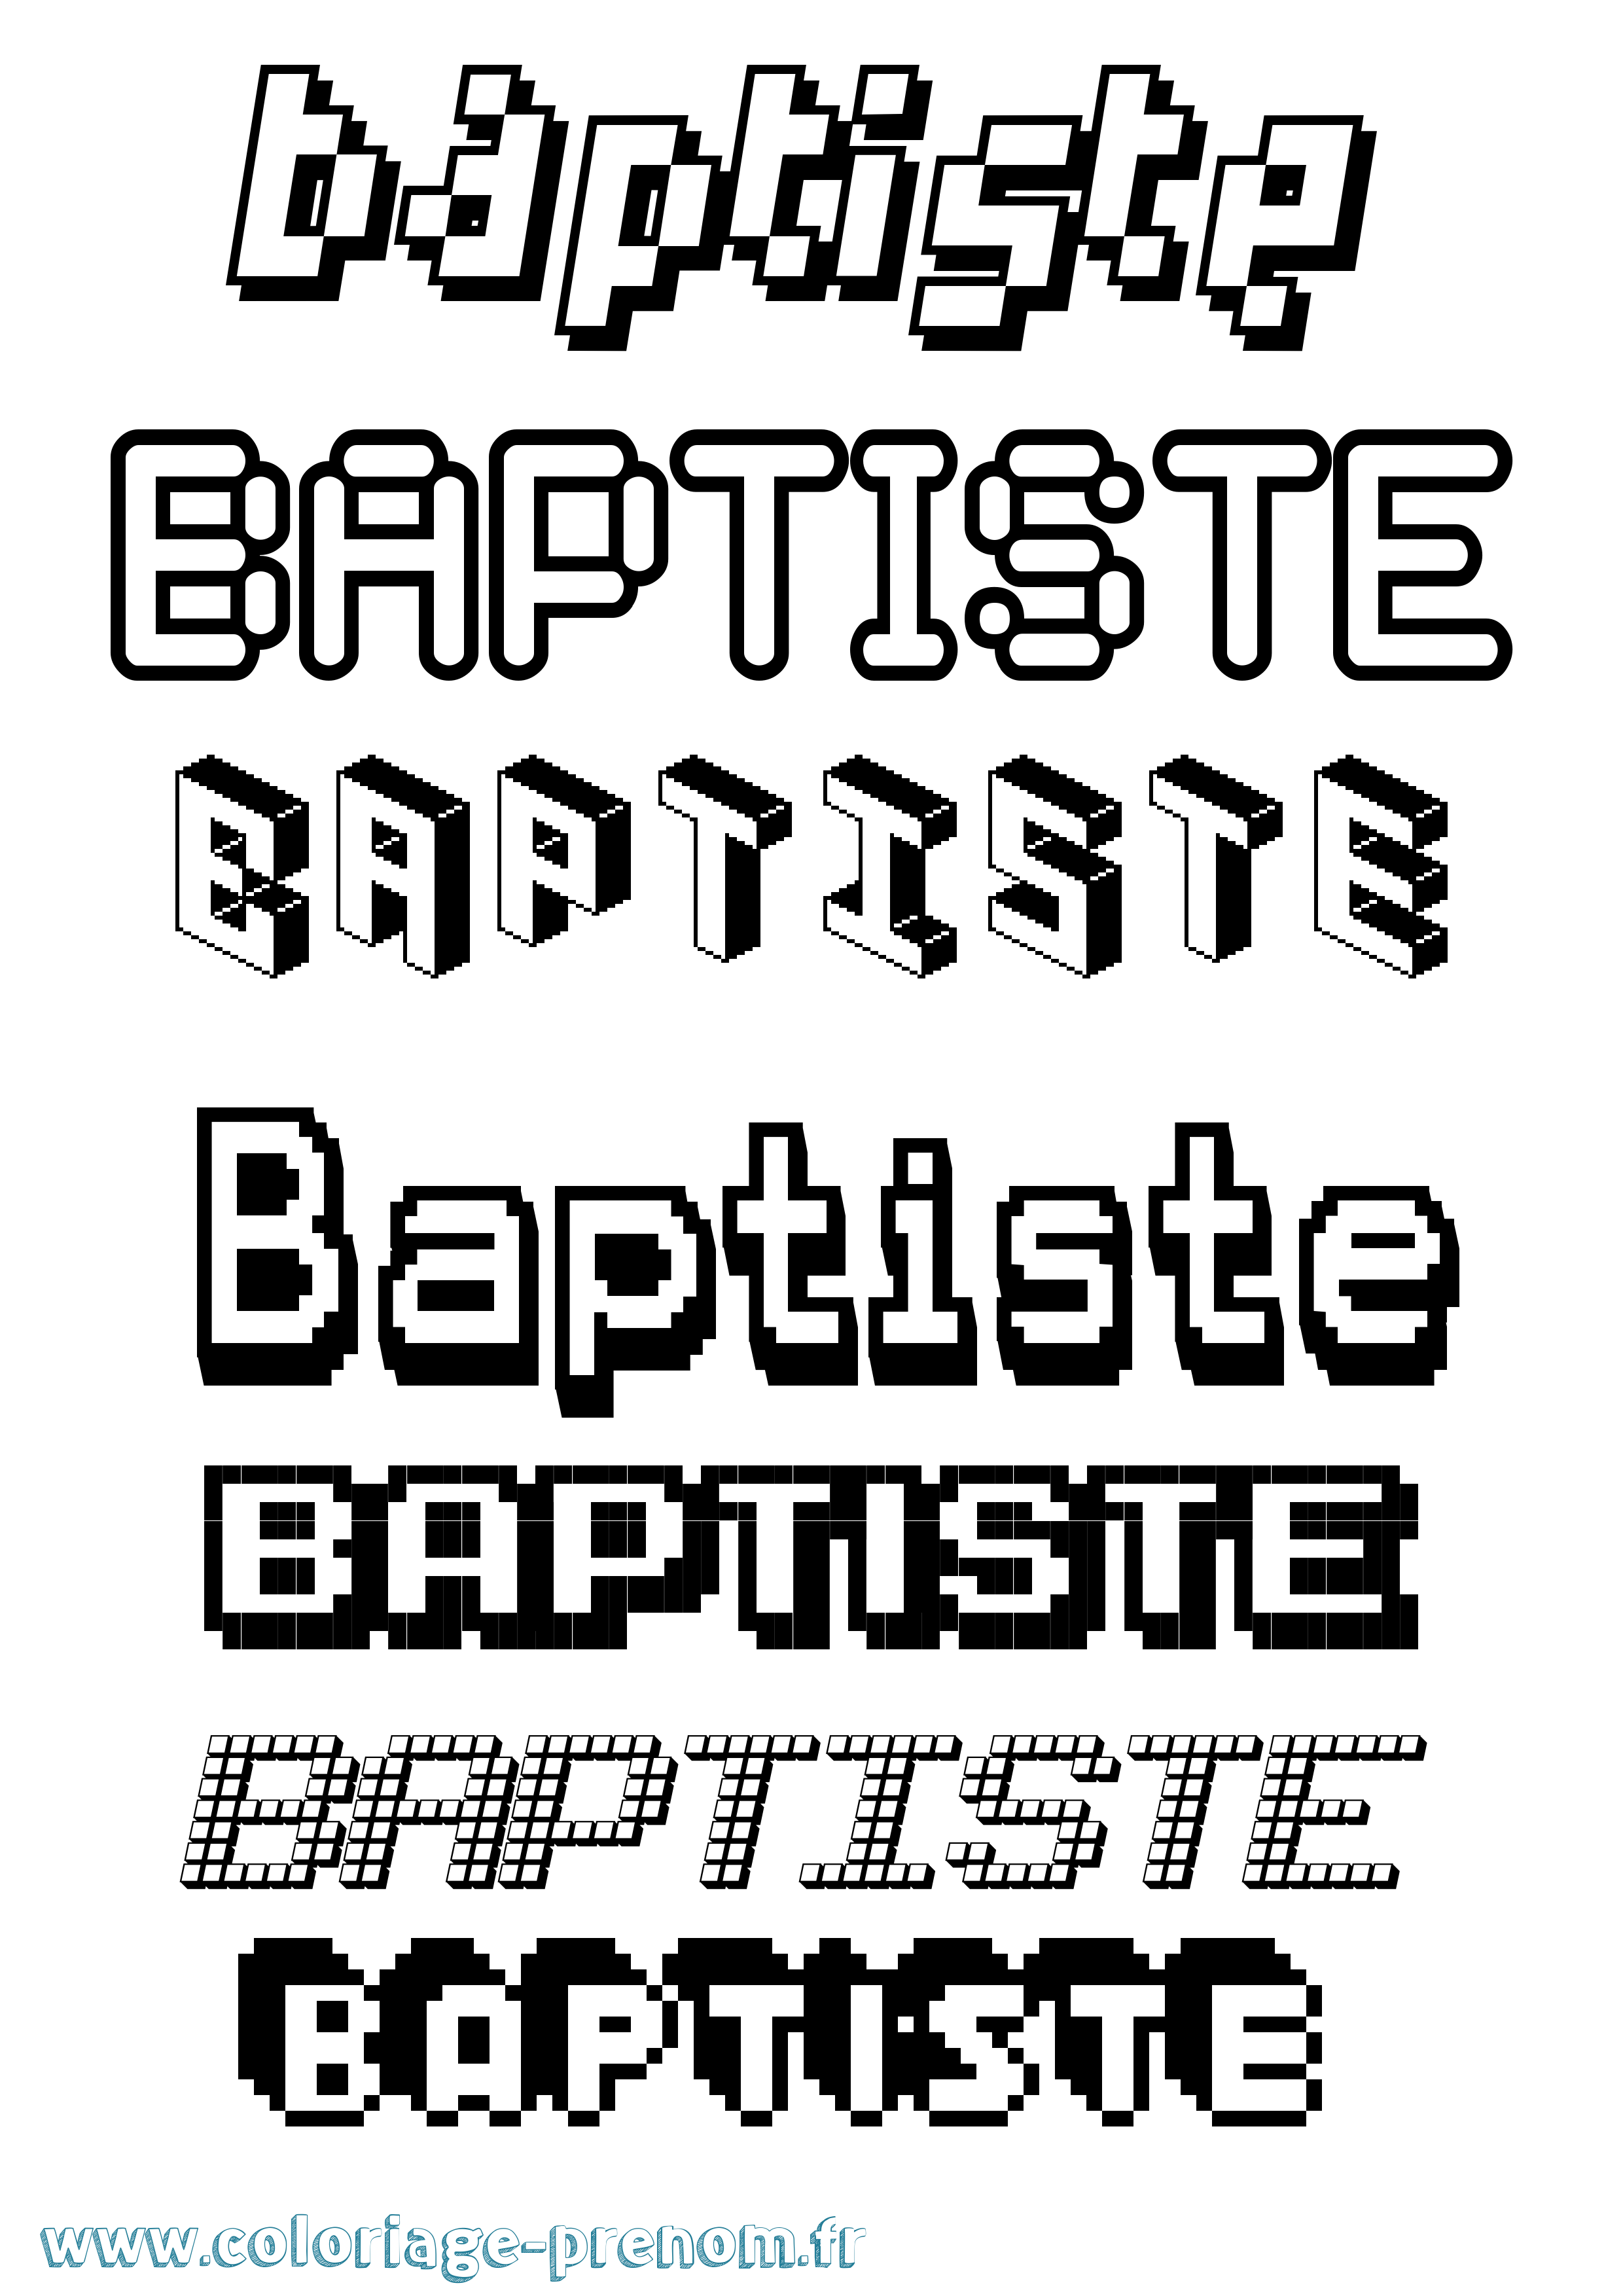 Coloriage prénom Baptiste